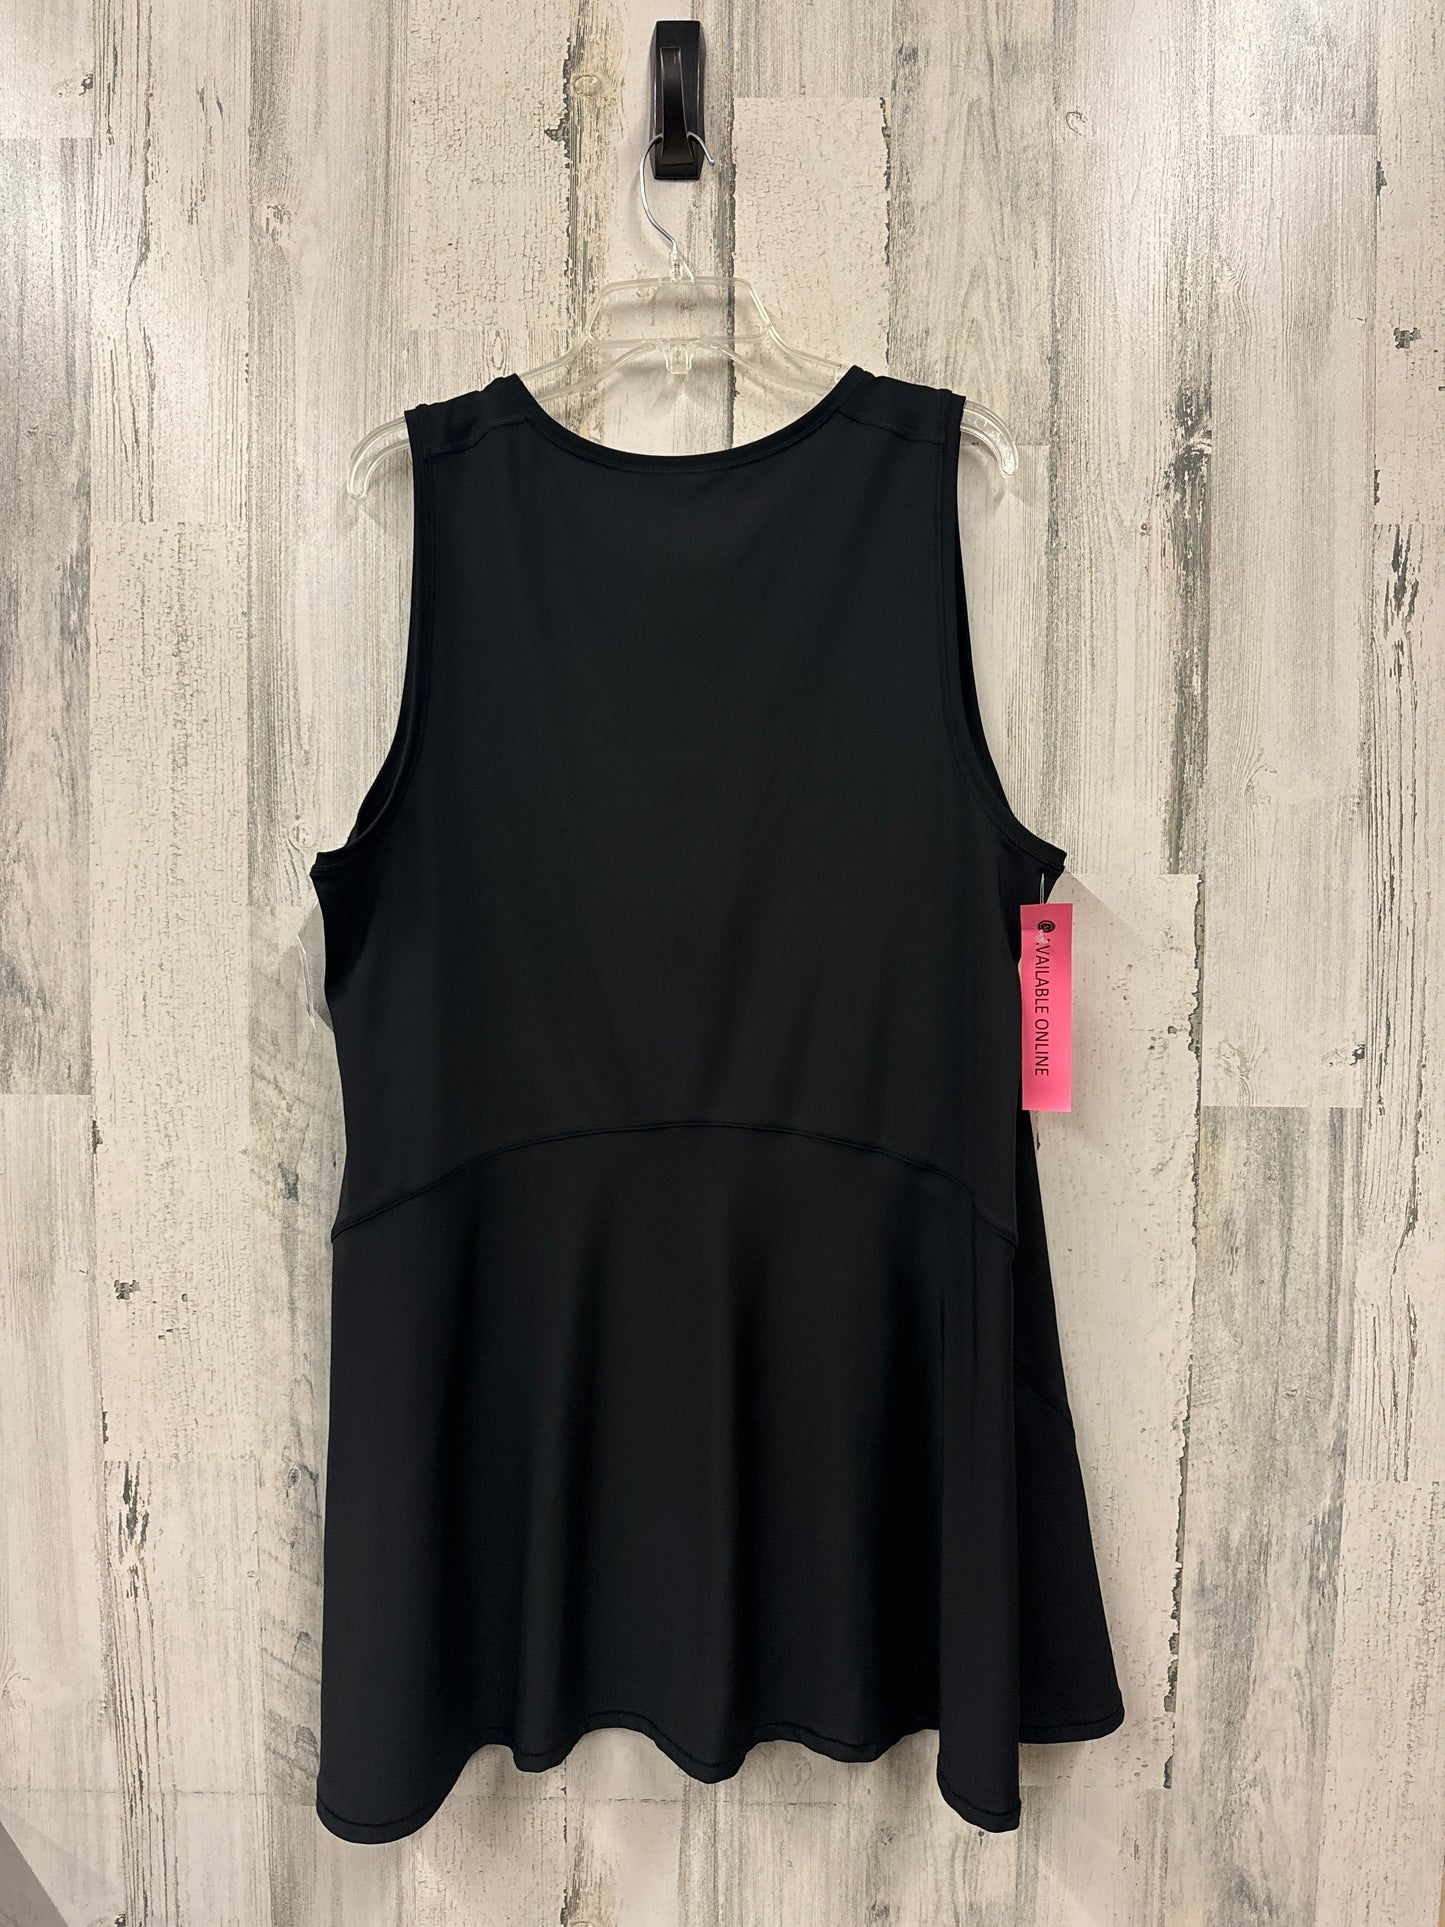 Black Athletic Dress Mta Pro, Size 2x